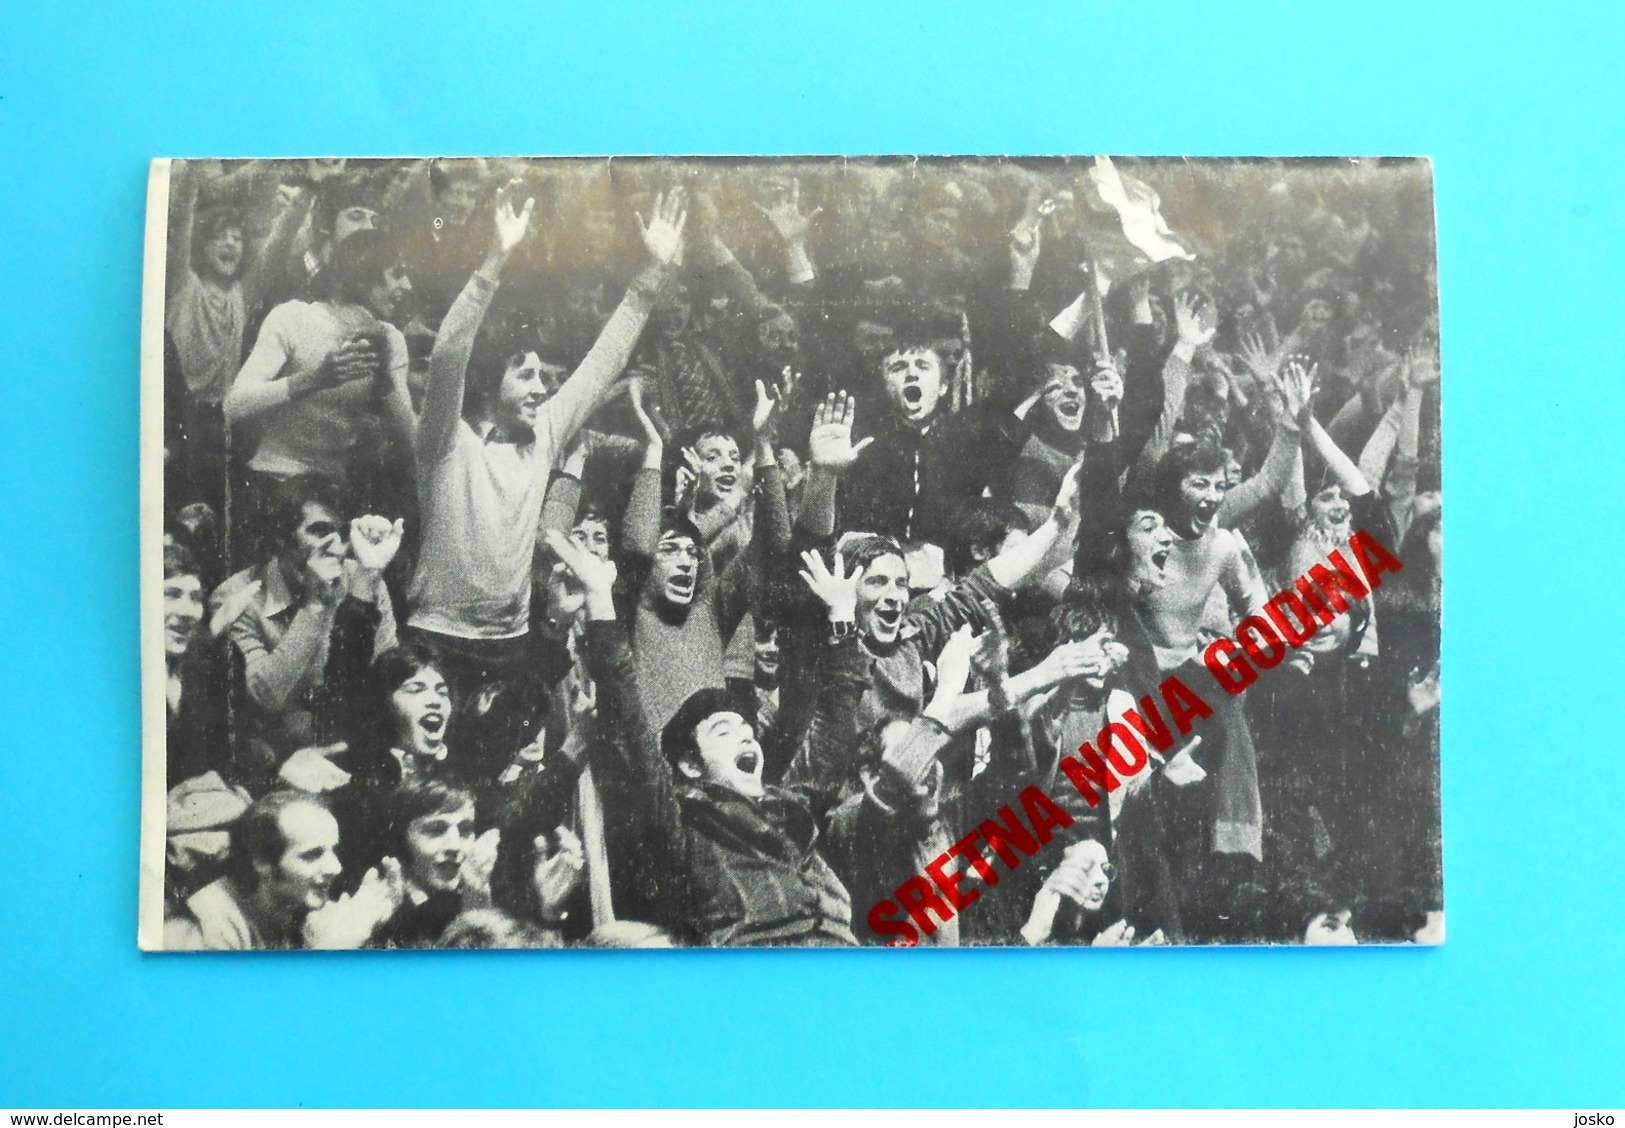 SARAJEVO 1980. - NEW YEAR TOURNAMENT ( indoor football - futsal ) - official programme * Bosnia Yugoslavia programm